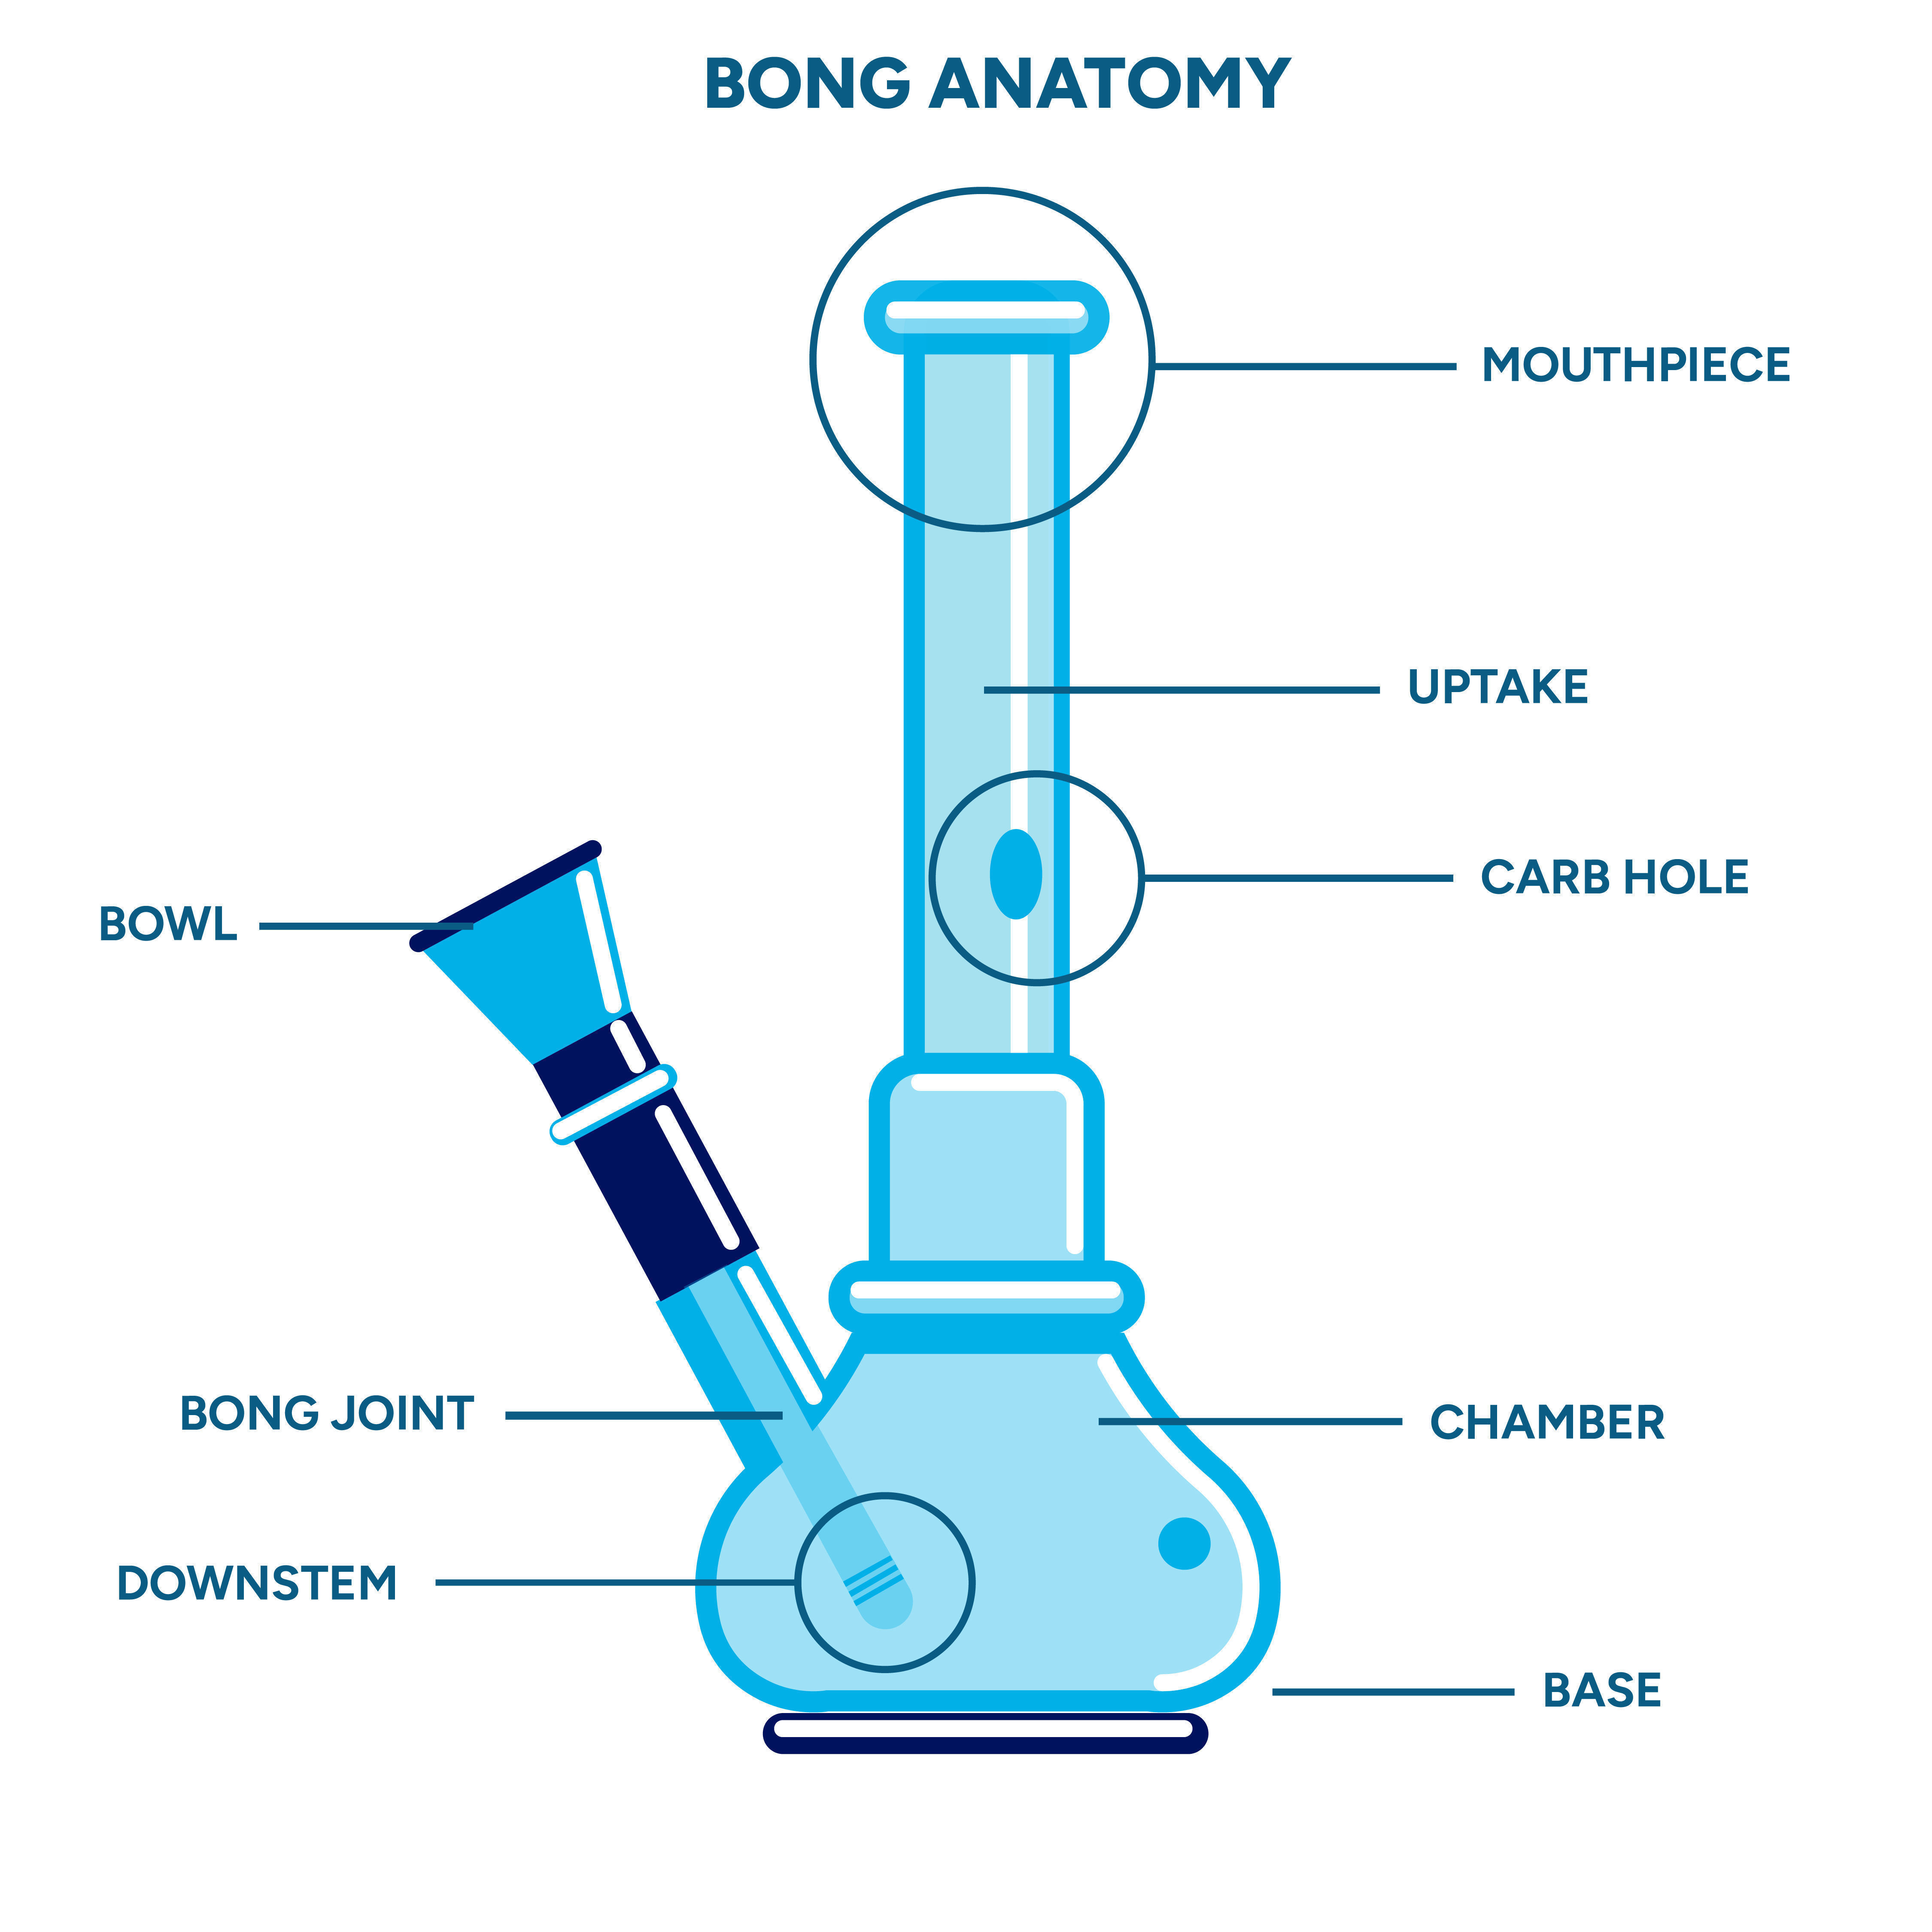 Anatomia Del Bong